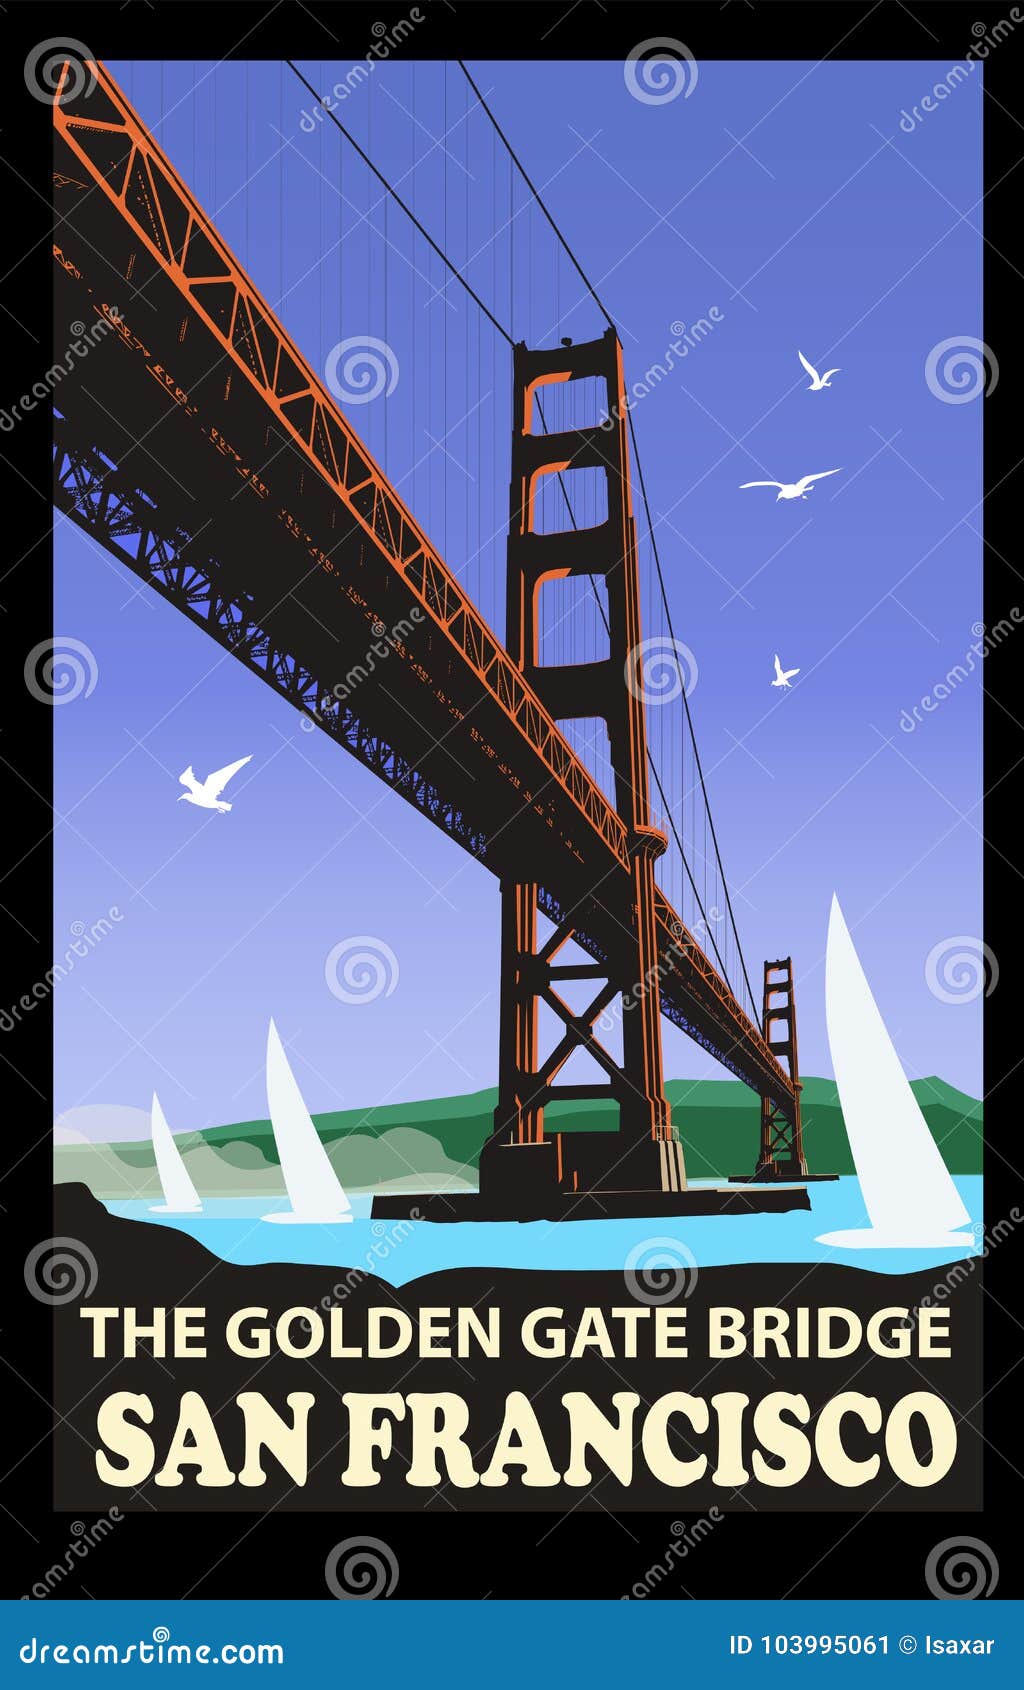 the golden gate bridge, san francisco